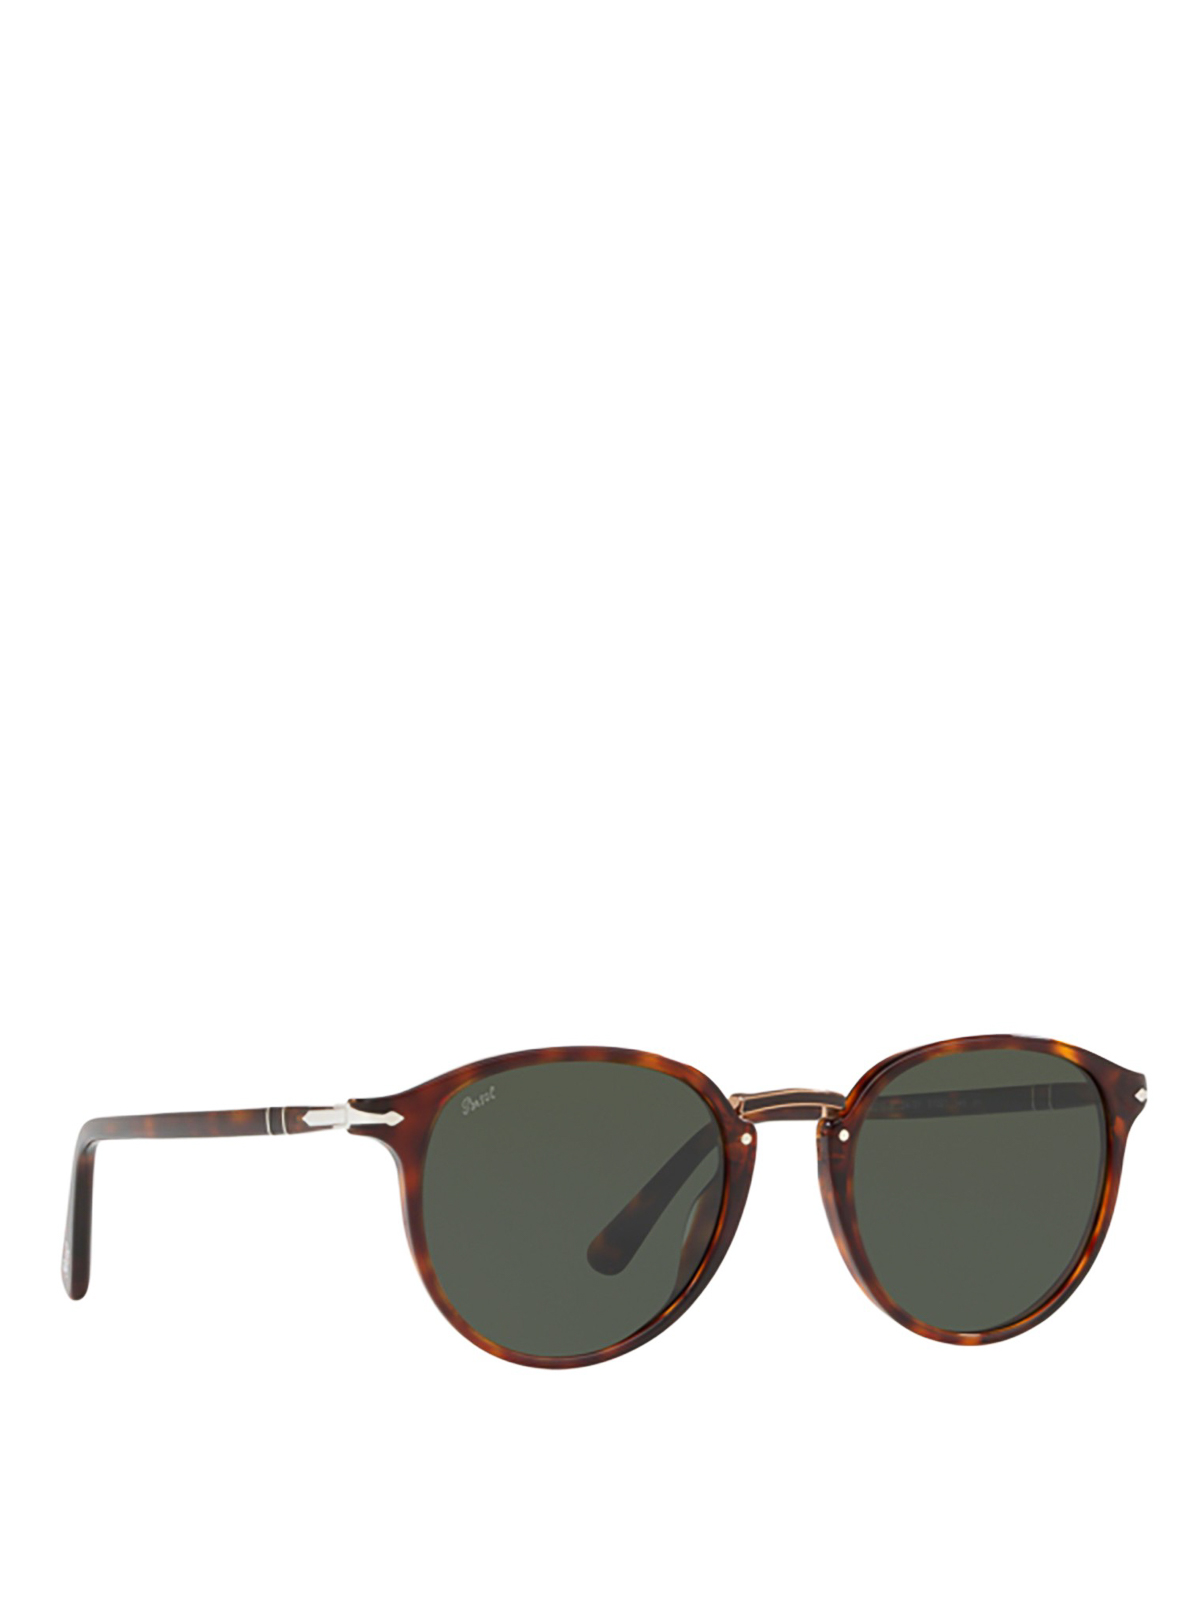 Persol Tortoise Sunglasses In Brown